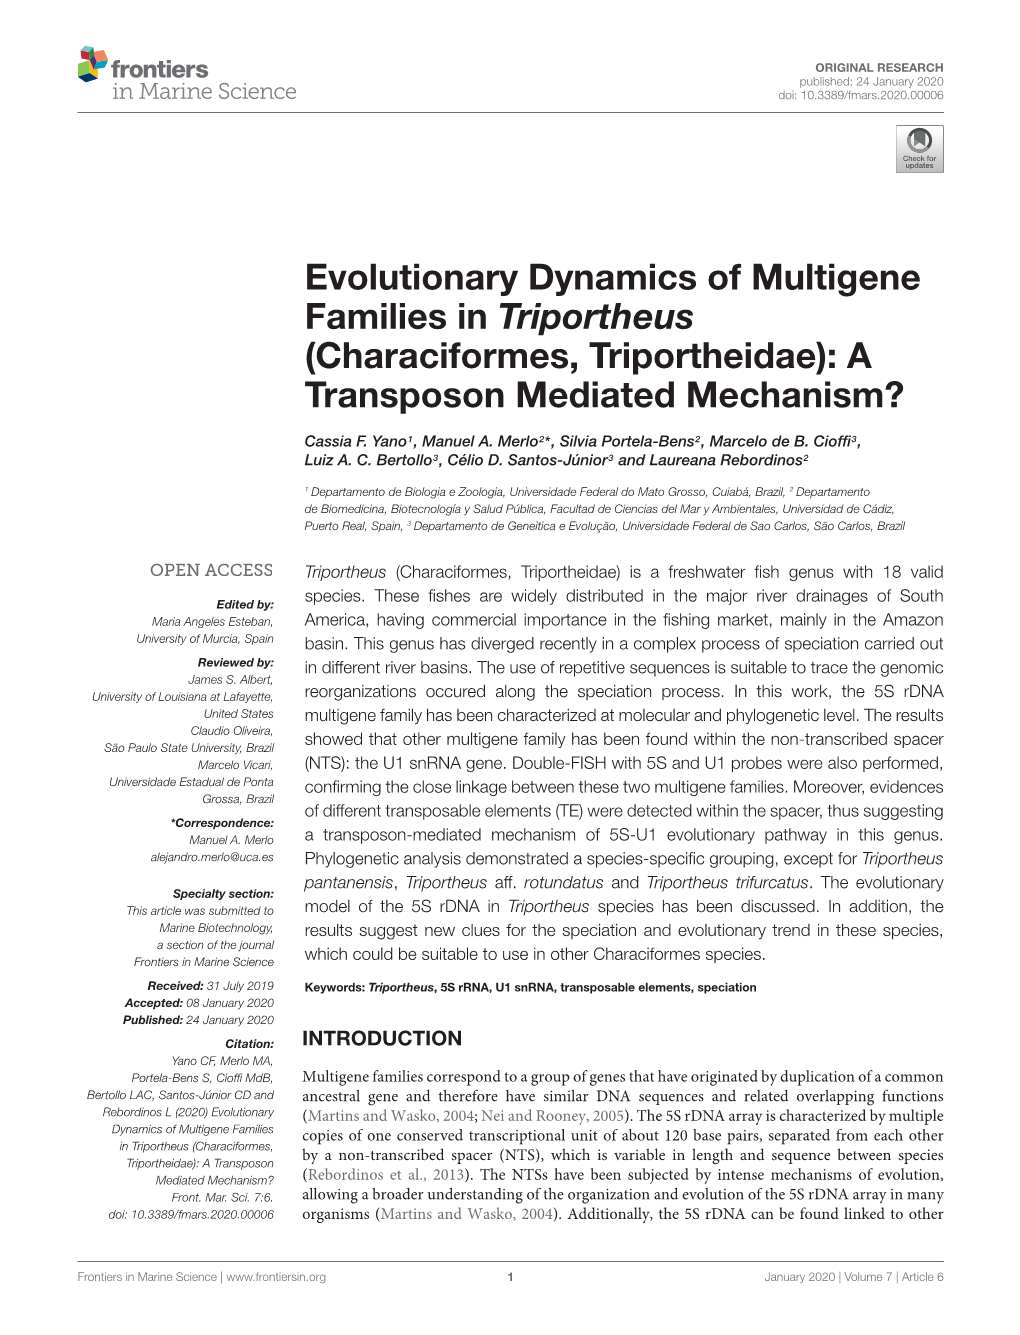 Evolutionary Dynamics of Multigene Families in Triportheus (Characiformes, Triportheidae): a Transposon Mediated Mechanism?